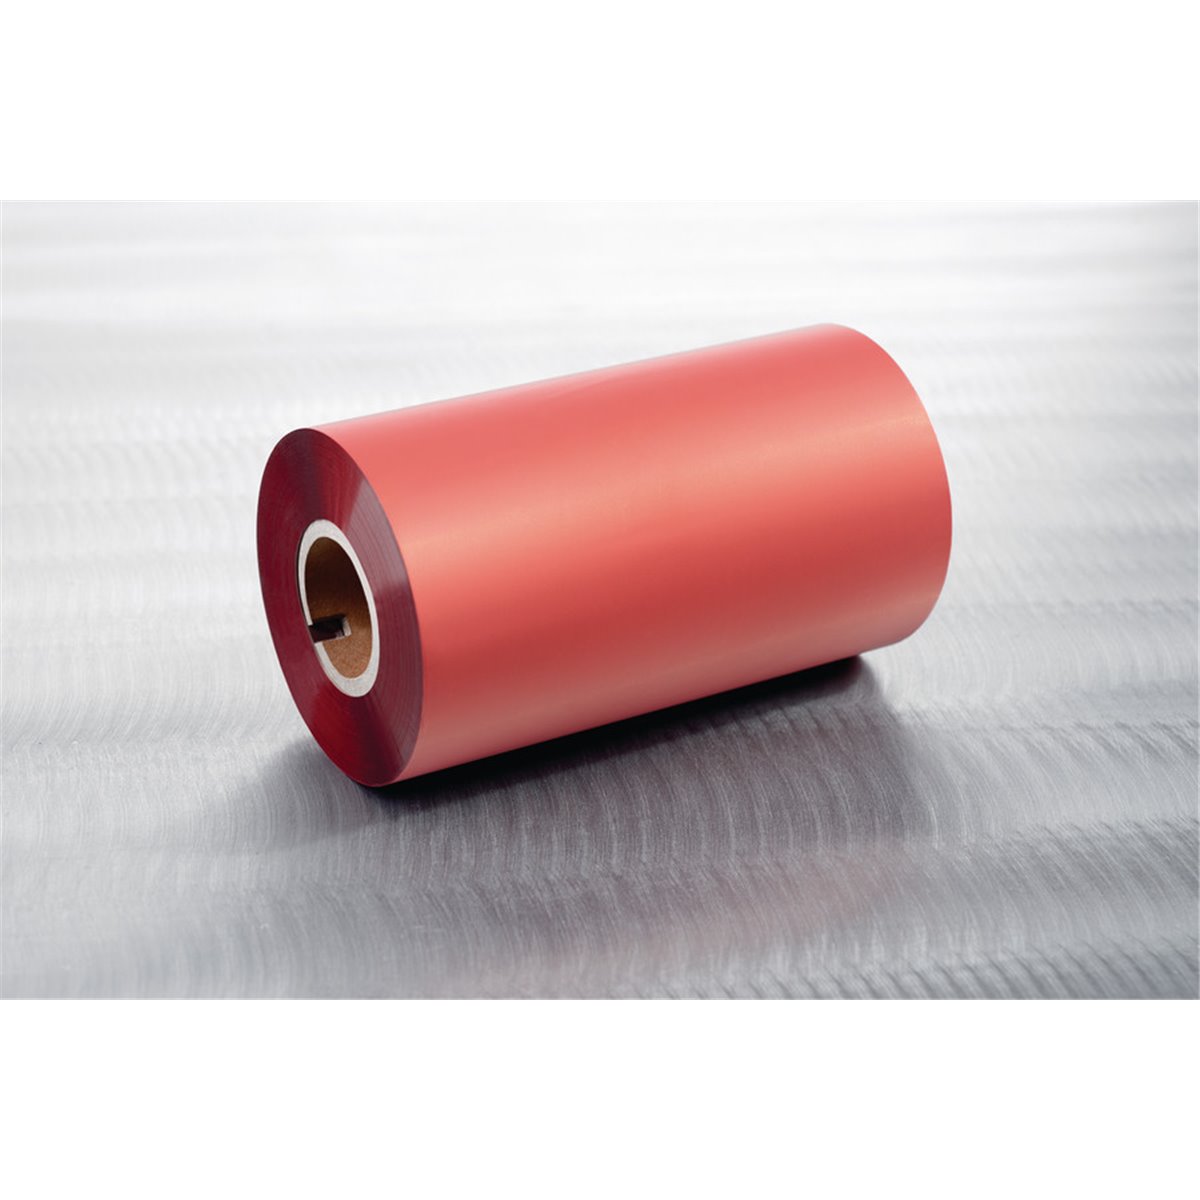 Thermal Transfer Ribbon TTRR 110 mm-PET-RD, 110mm x 300m, red HellermannTyton.